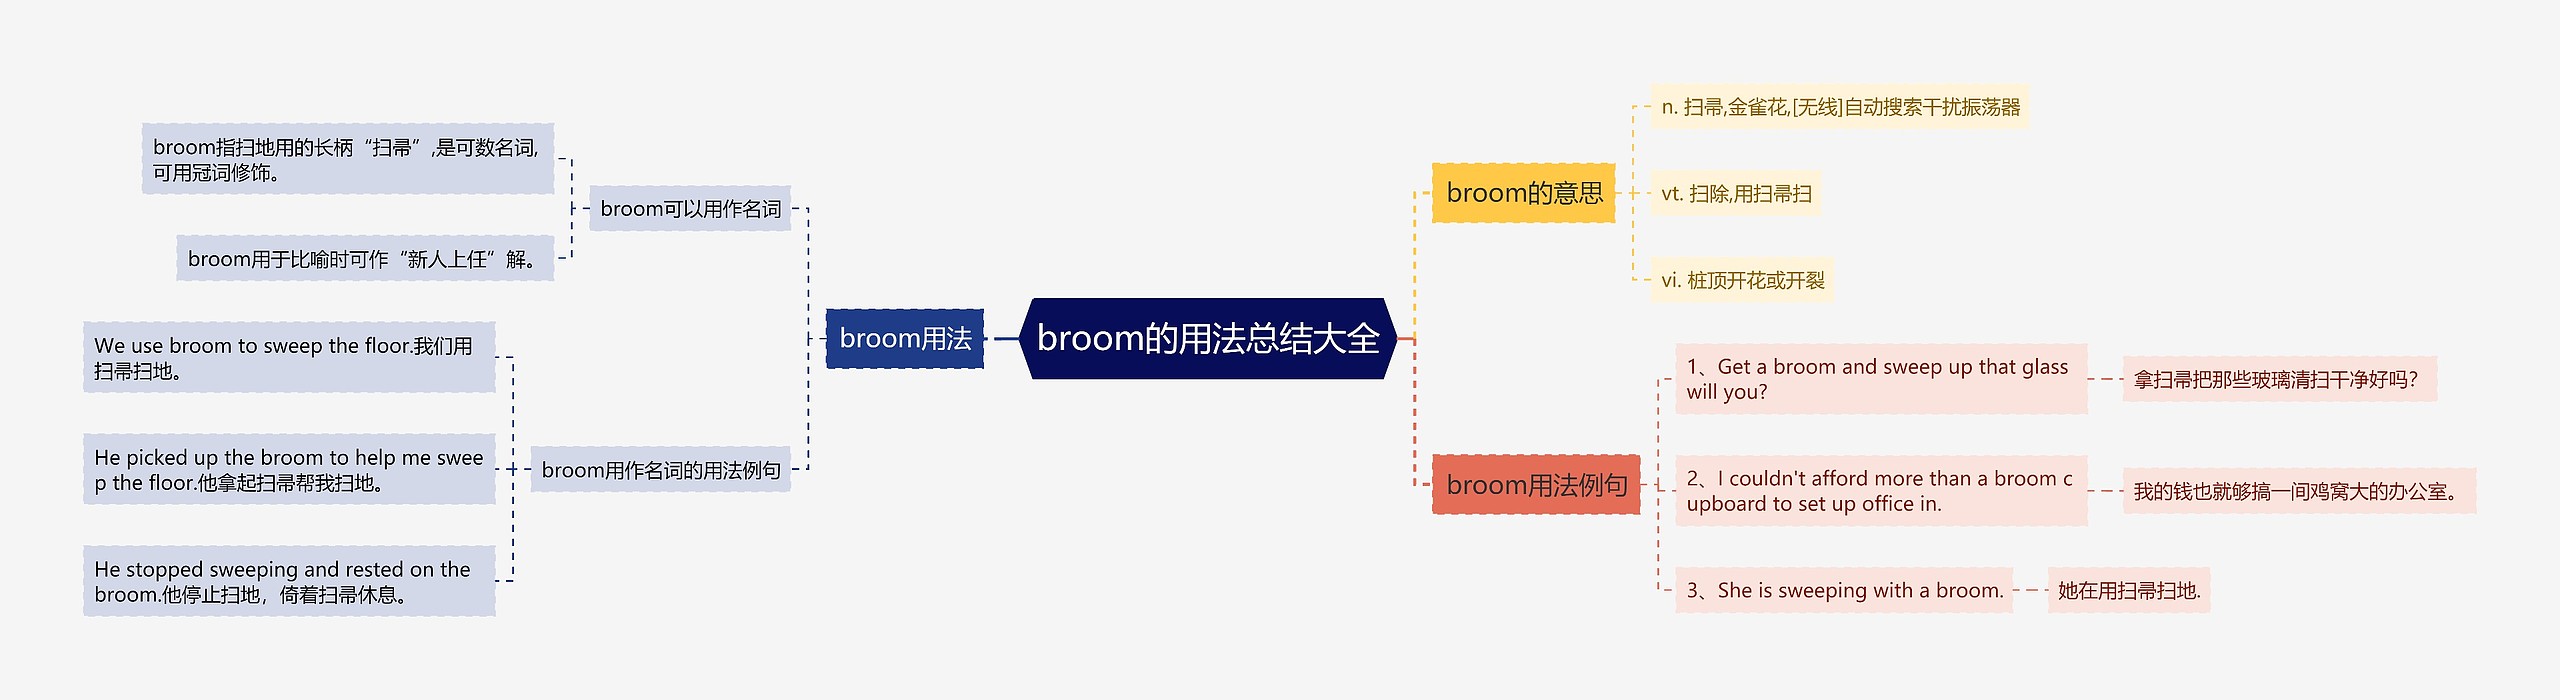 broom的用法总结大全